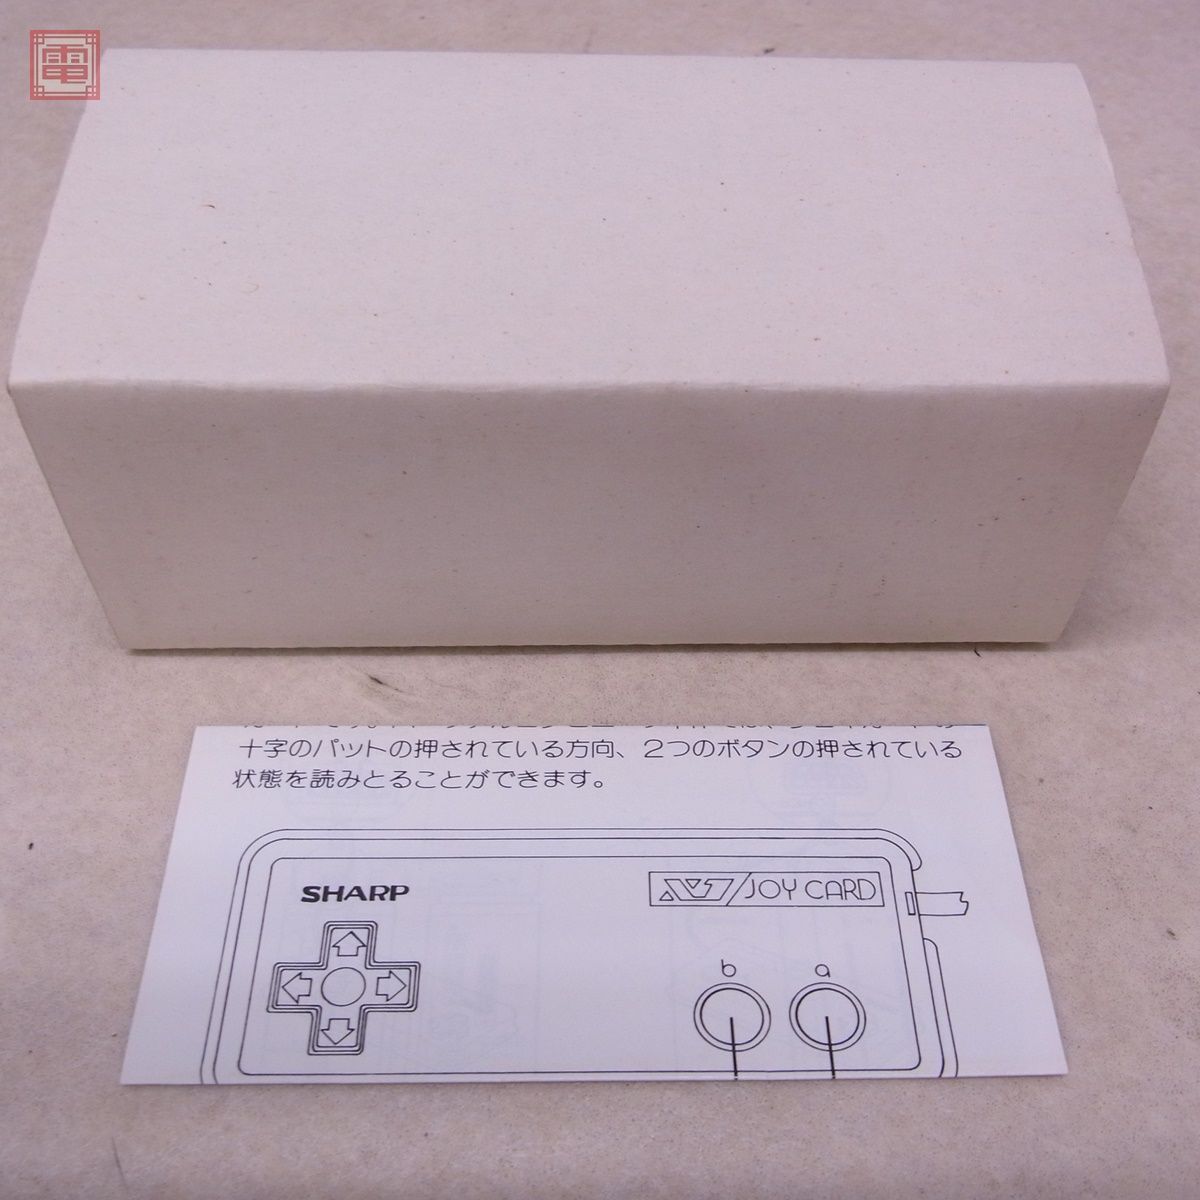  operation goods SHARP X1/X68000 etc. Joy card JOYCARD CZ-8NJ1 SHARP box opinion attaching [10